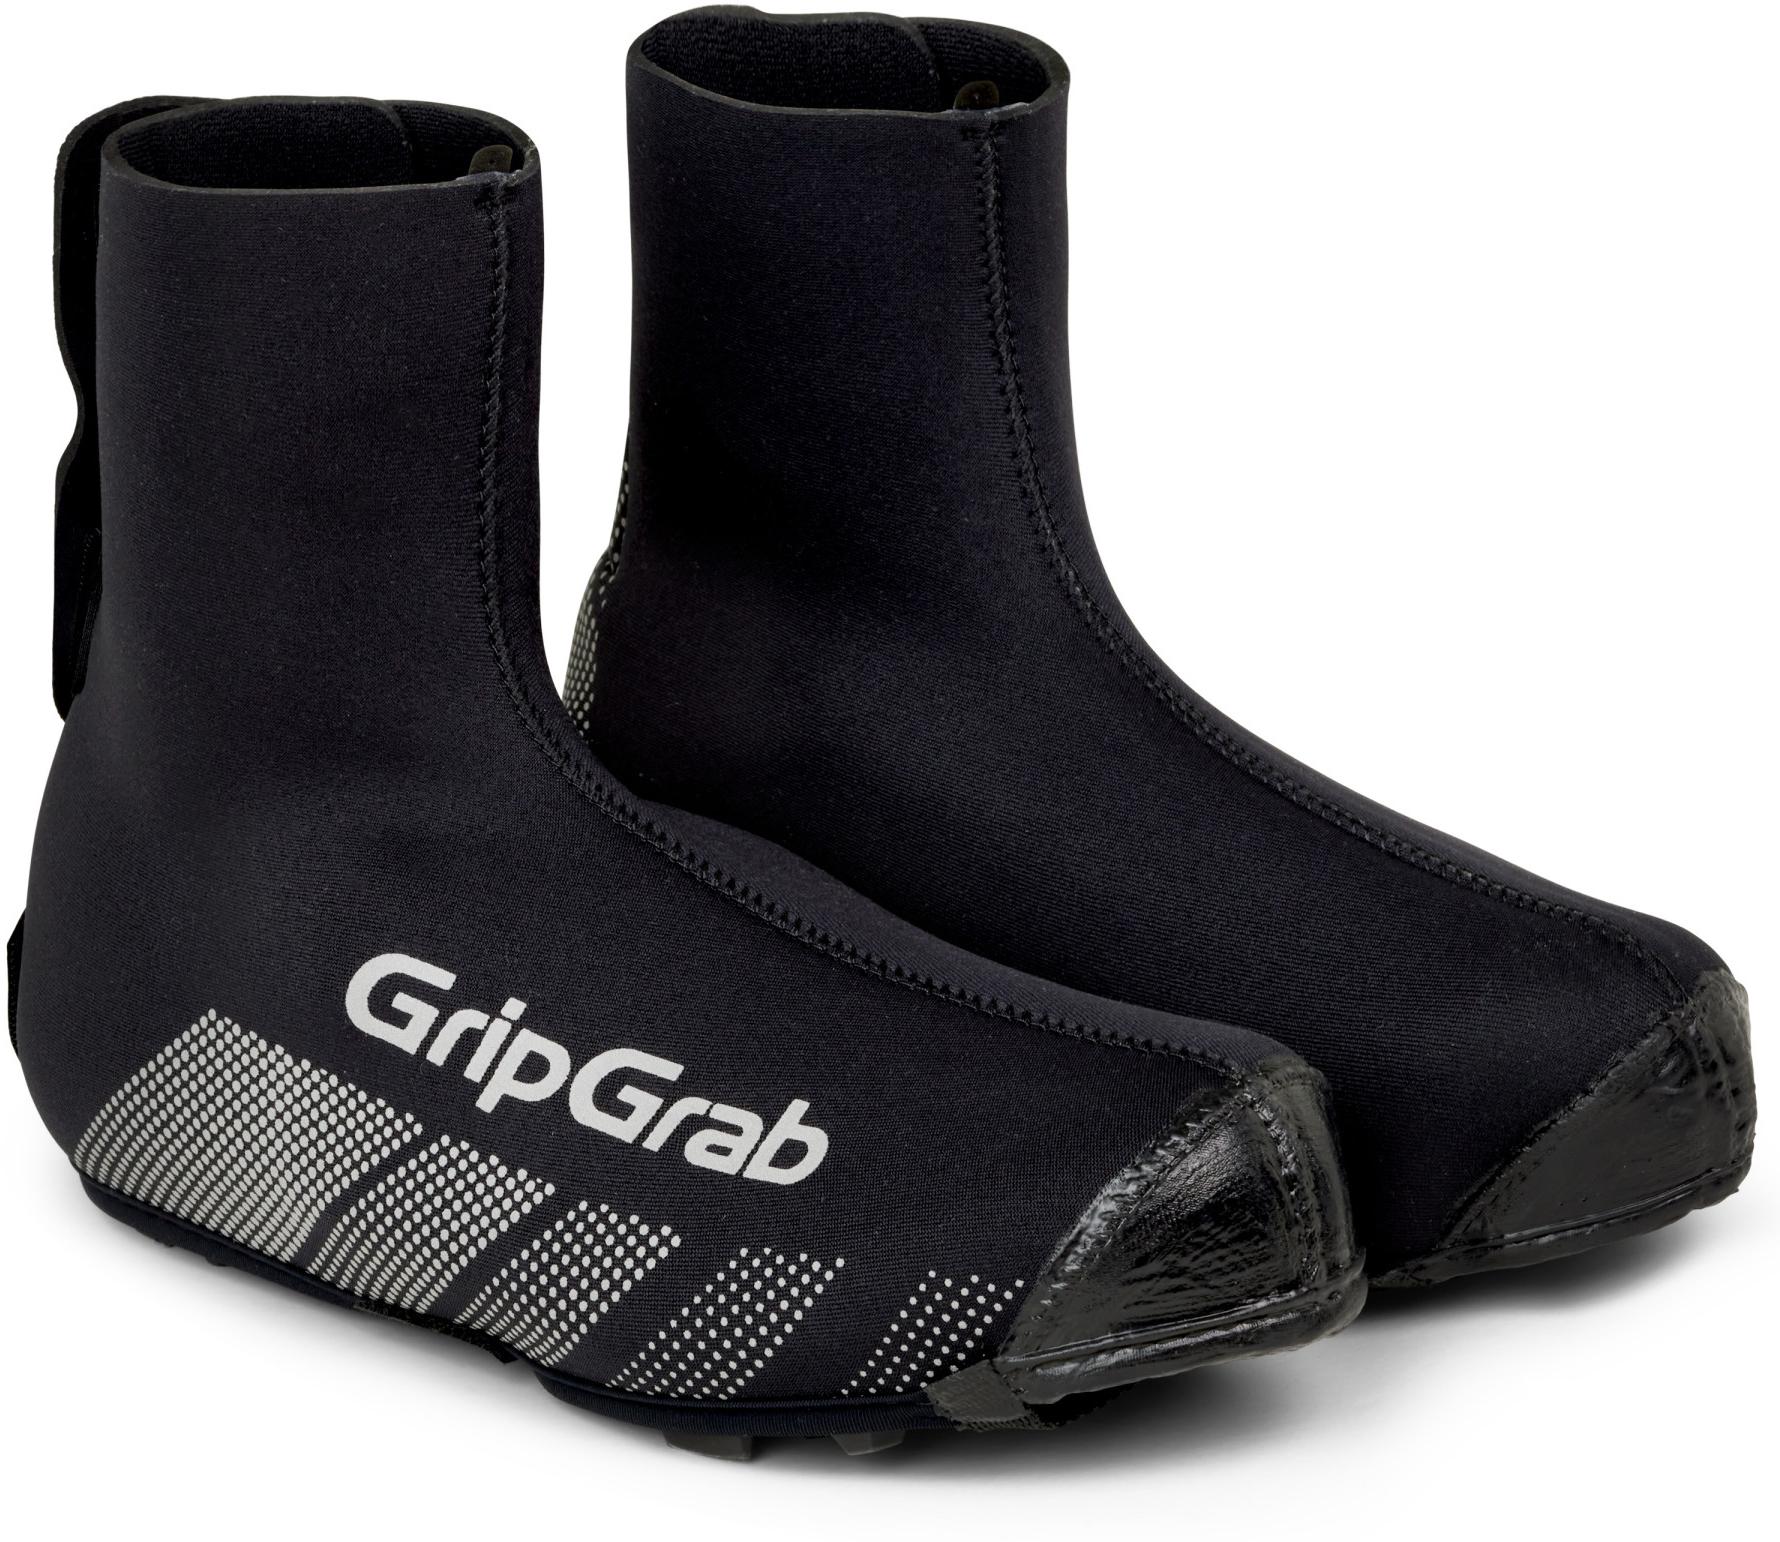 Gripgrab Ride Winter Shoe Cover - Black